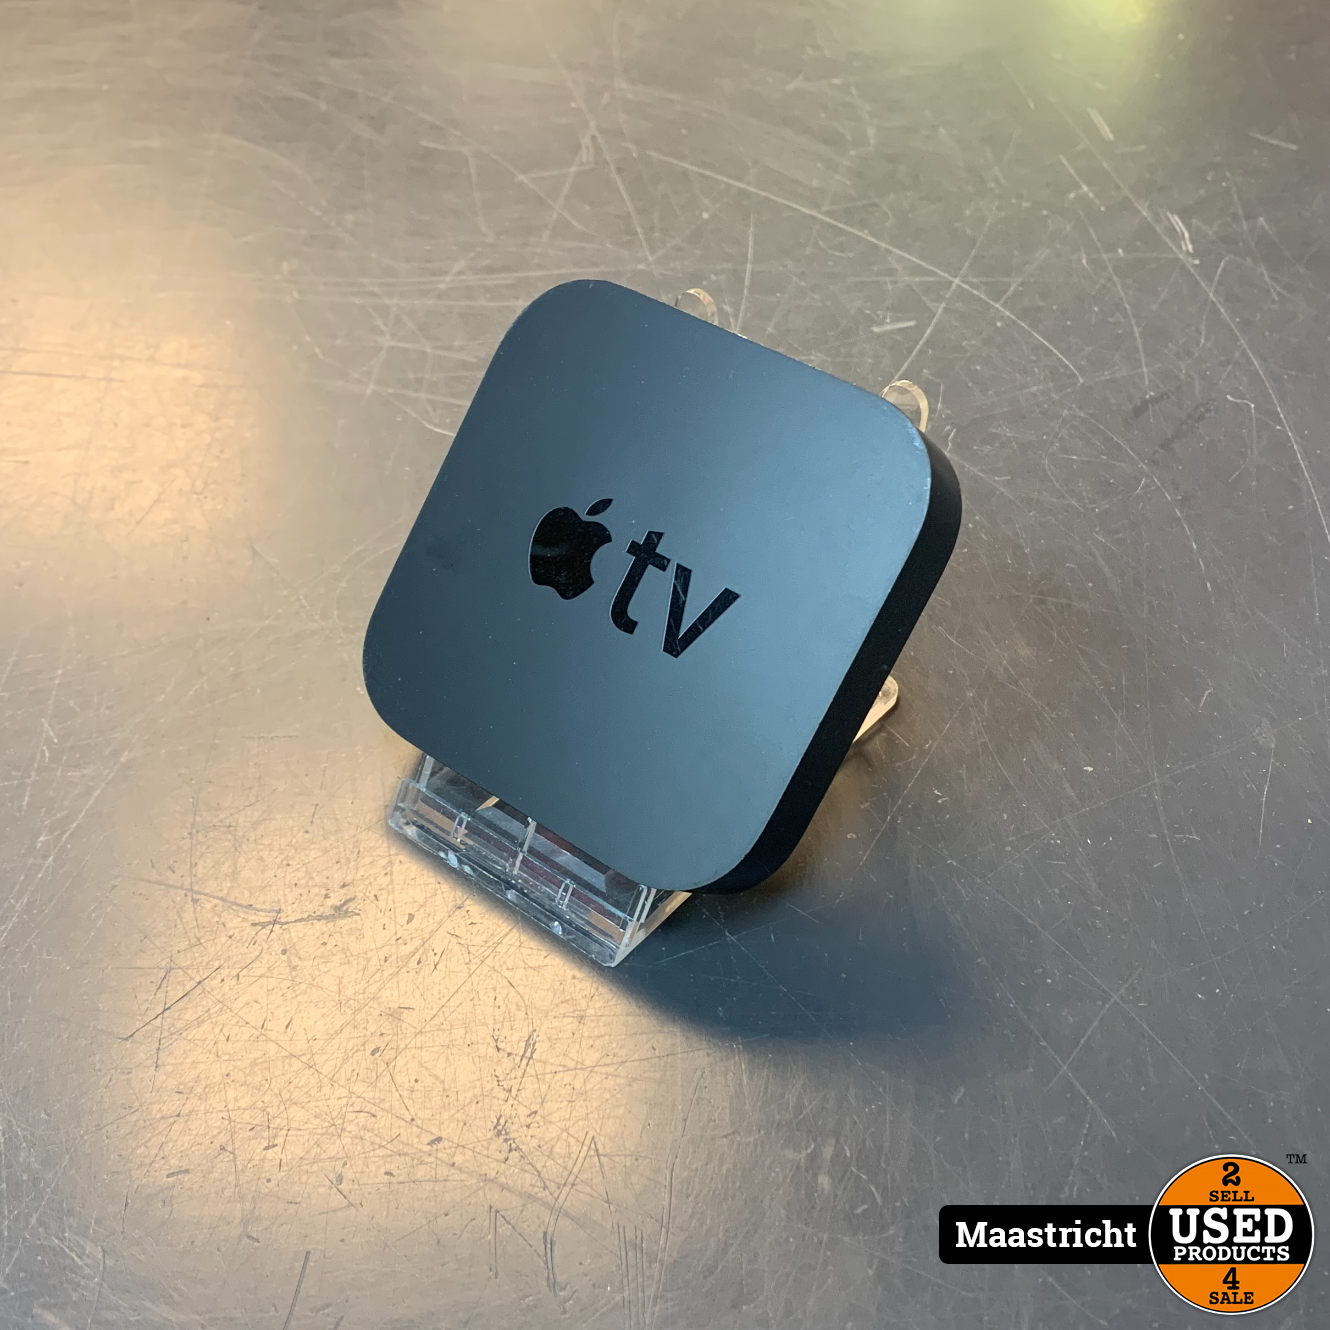 Apple TV3 Model (zonder remote) - Used Maasstricht